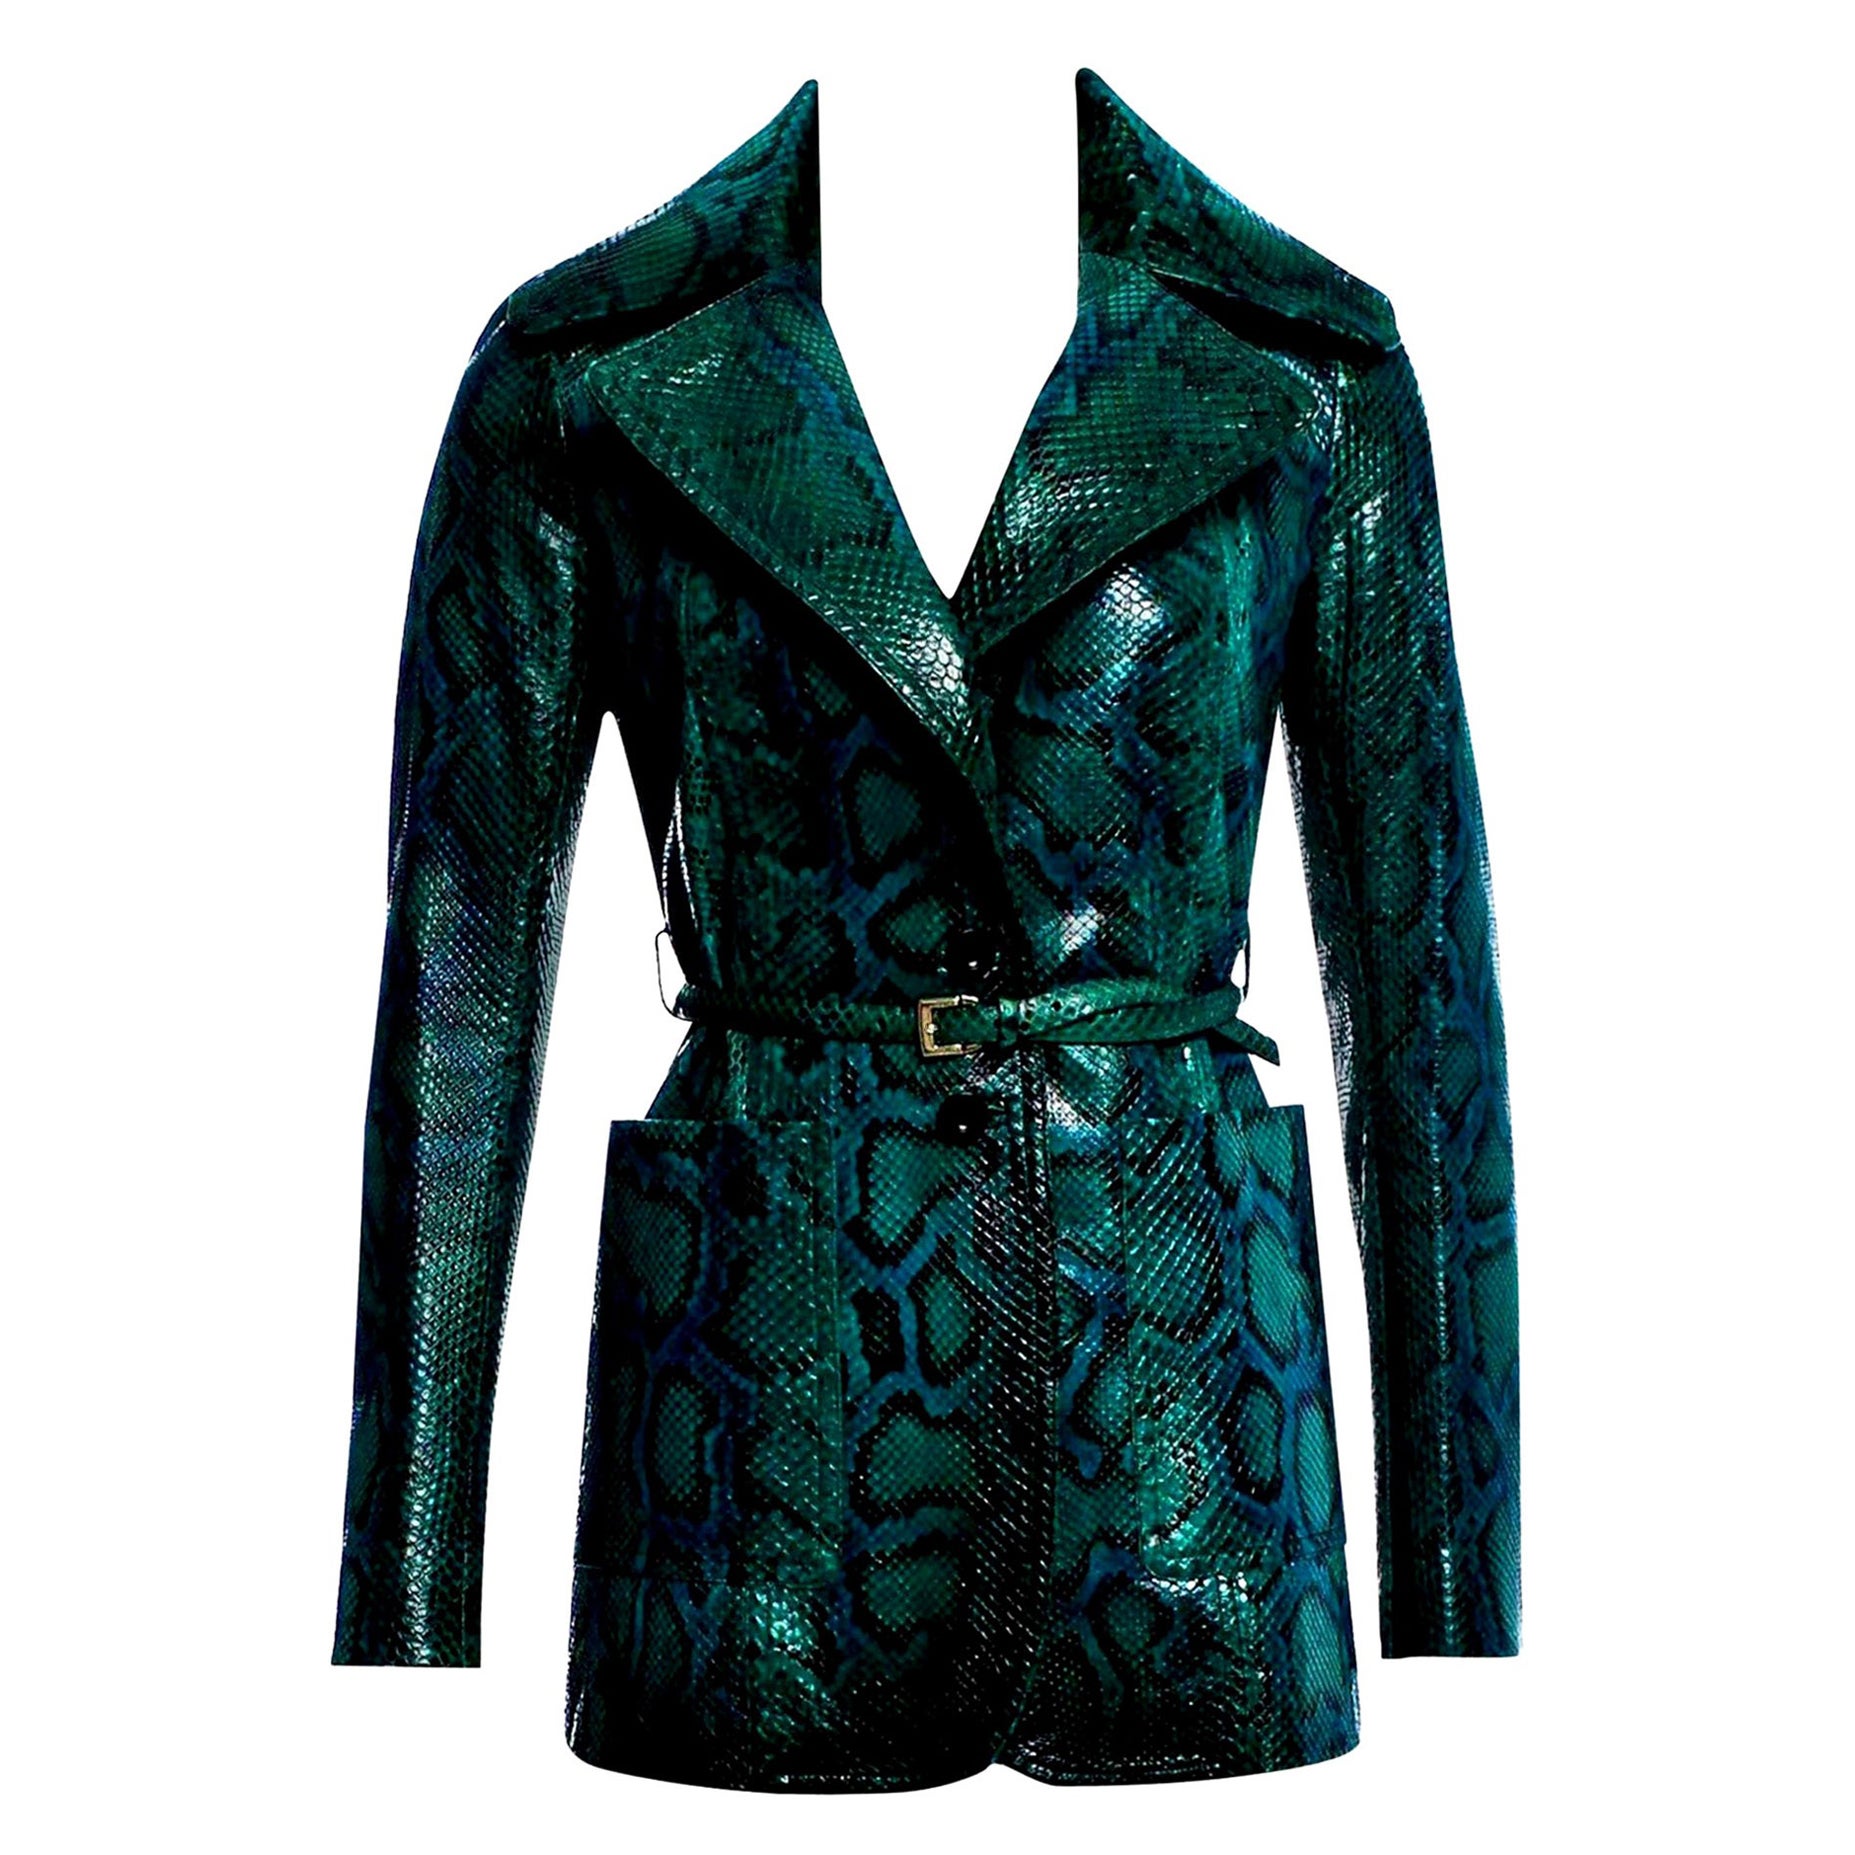 New Rare Gucci 90th Anniversary Python Snakeskin Jacket Gaga Coat Blazer $14,650